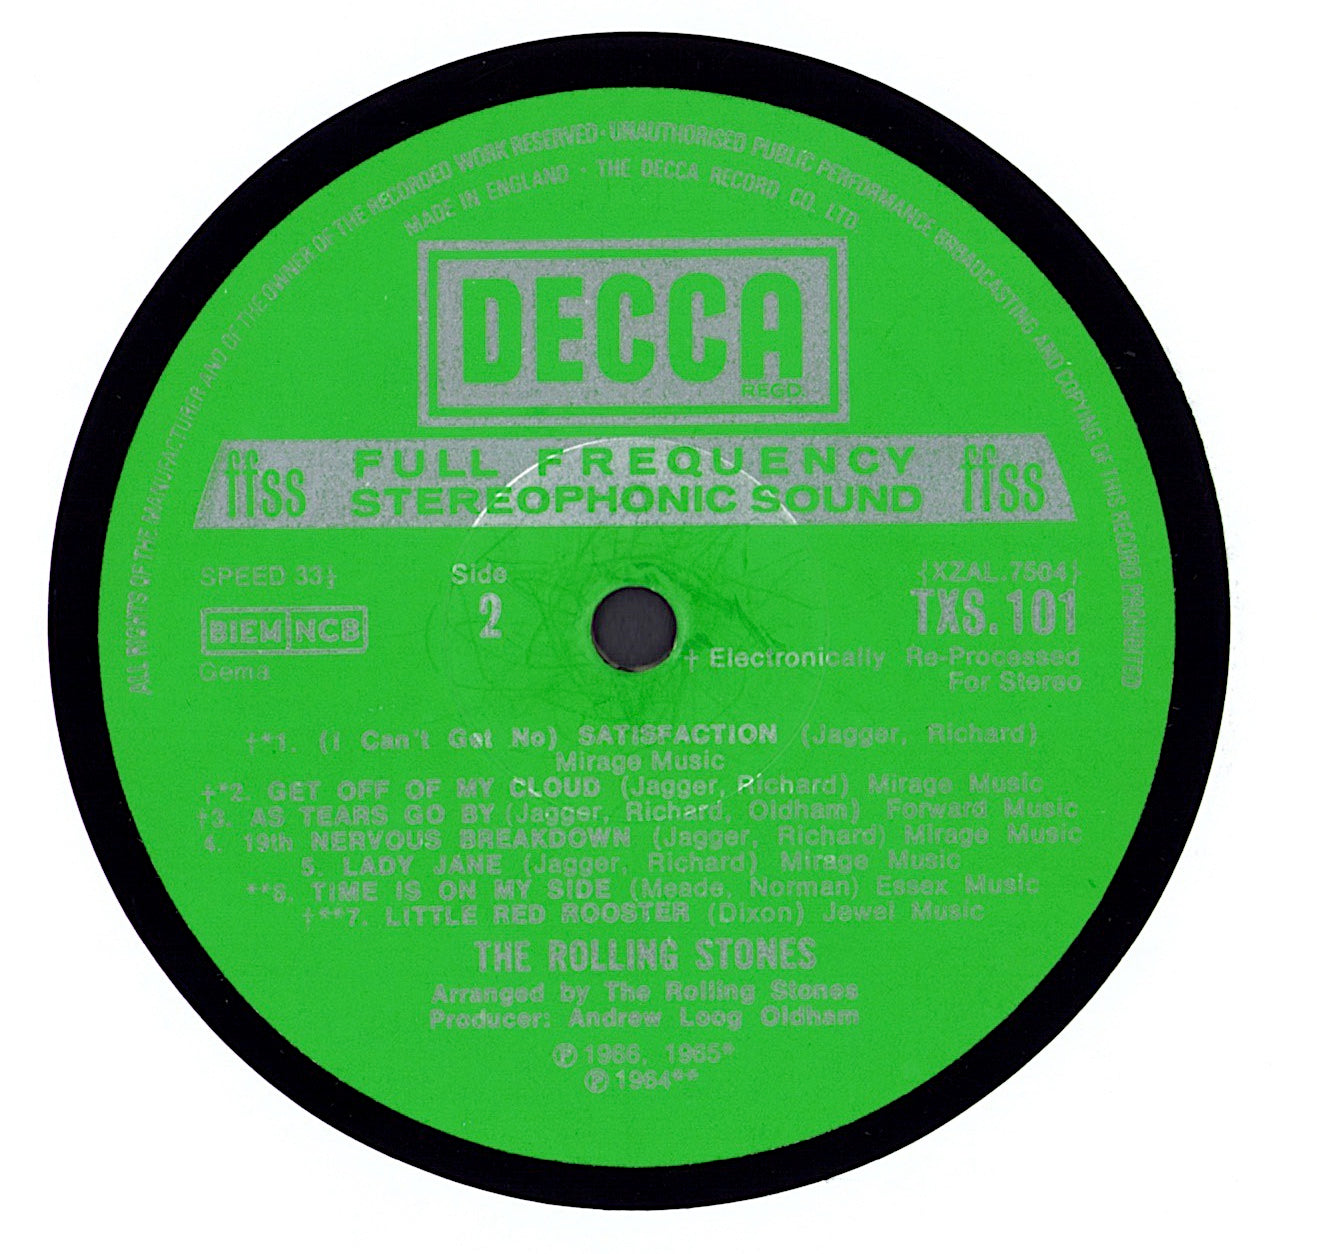 Rolling Stones ‎- Big Hits High Tide And Green Grass Vinyl LP